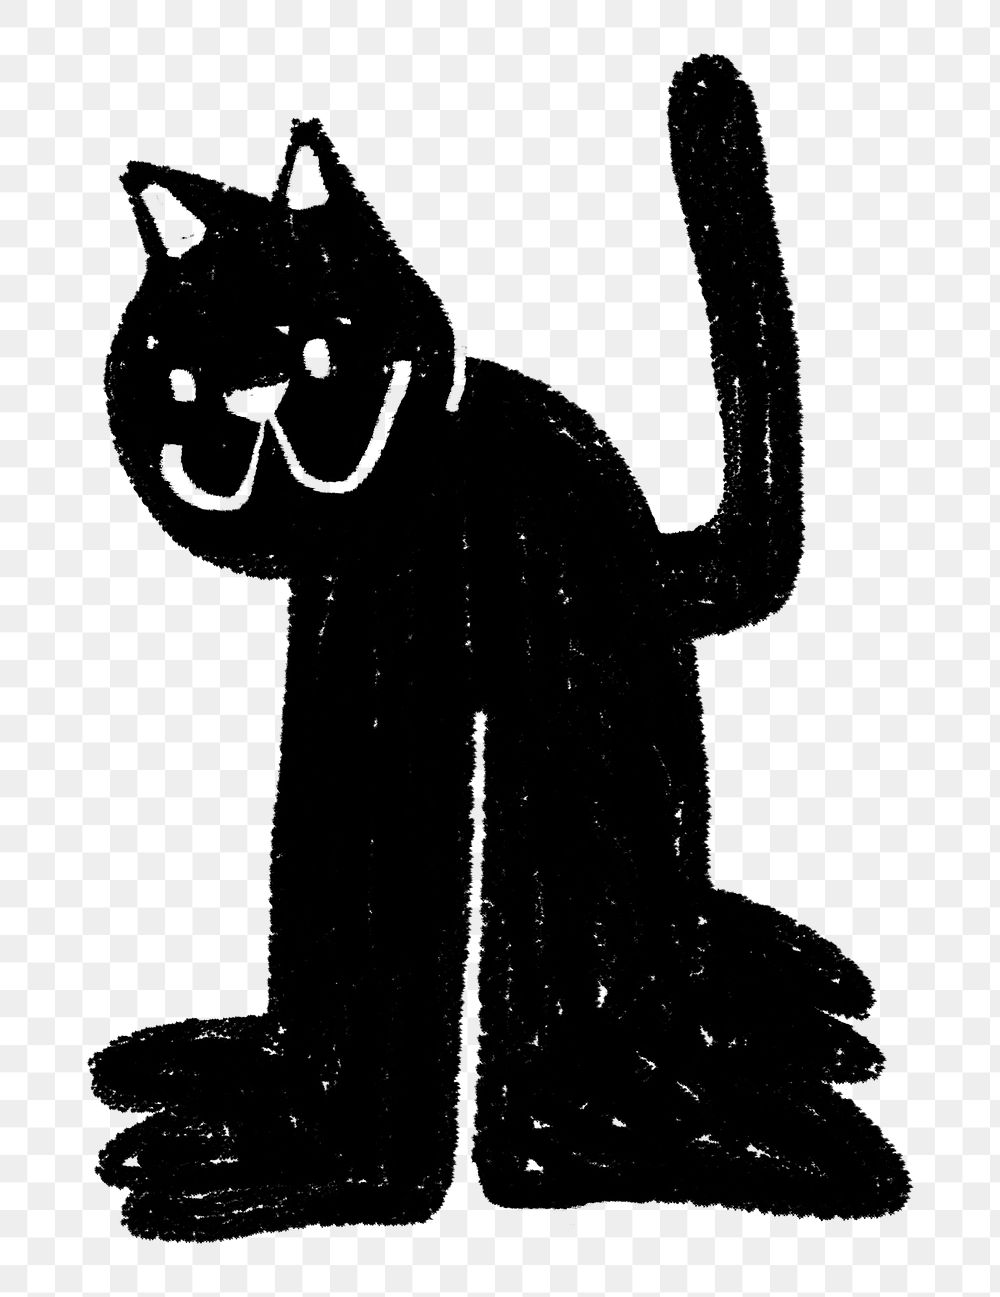 Black cat png sticker, animal doodle graphic, transparent background